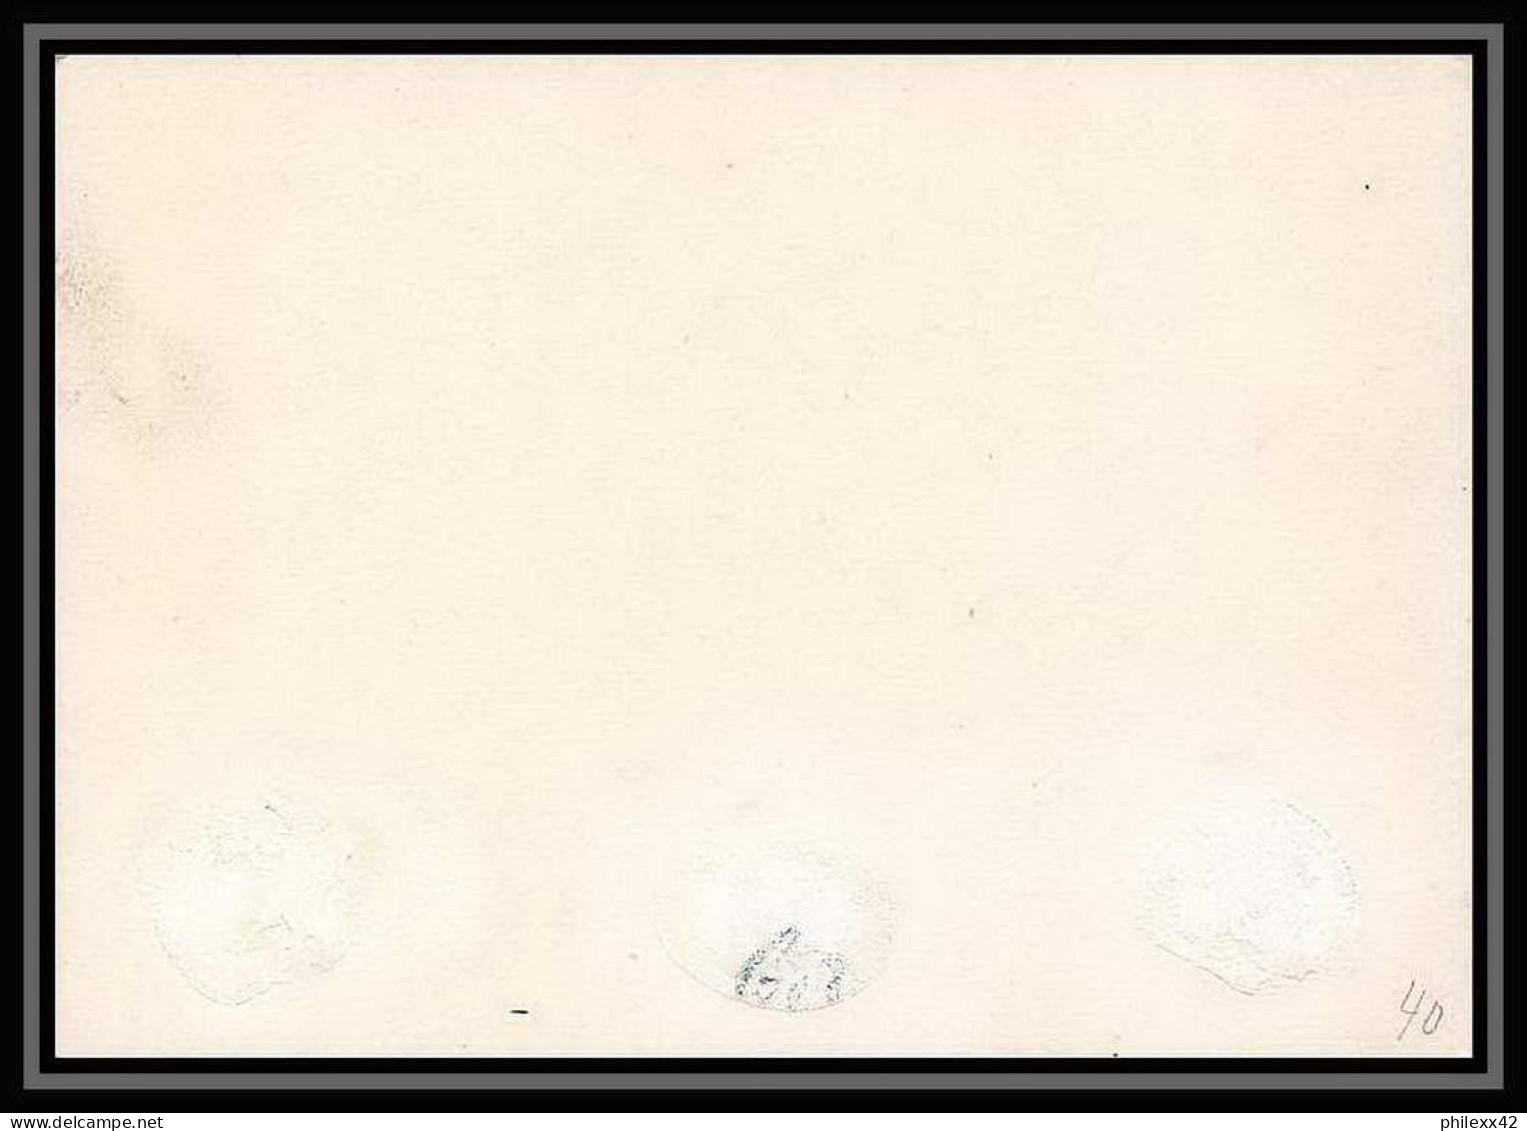 4054/ Brésil (brazil) Entier Stationery Carte Postale (postcard) N°10 Neuf (mint) 1883 - Ganzsachen